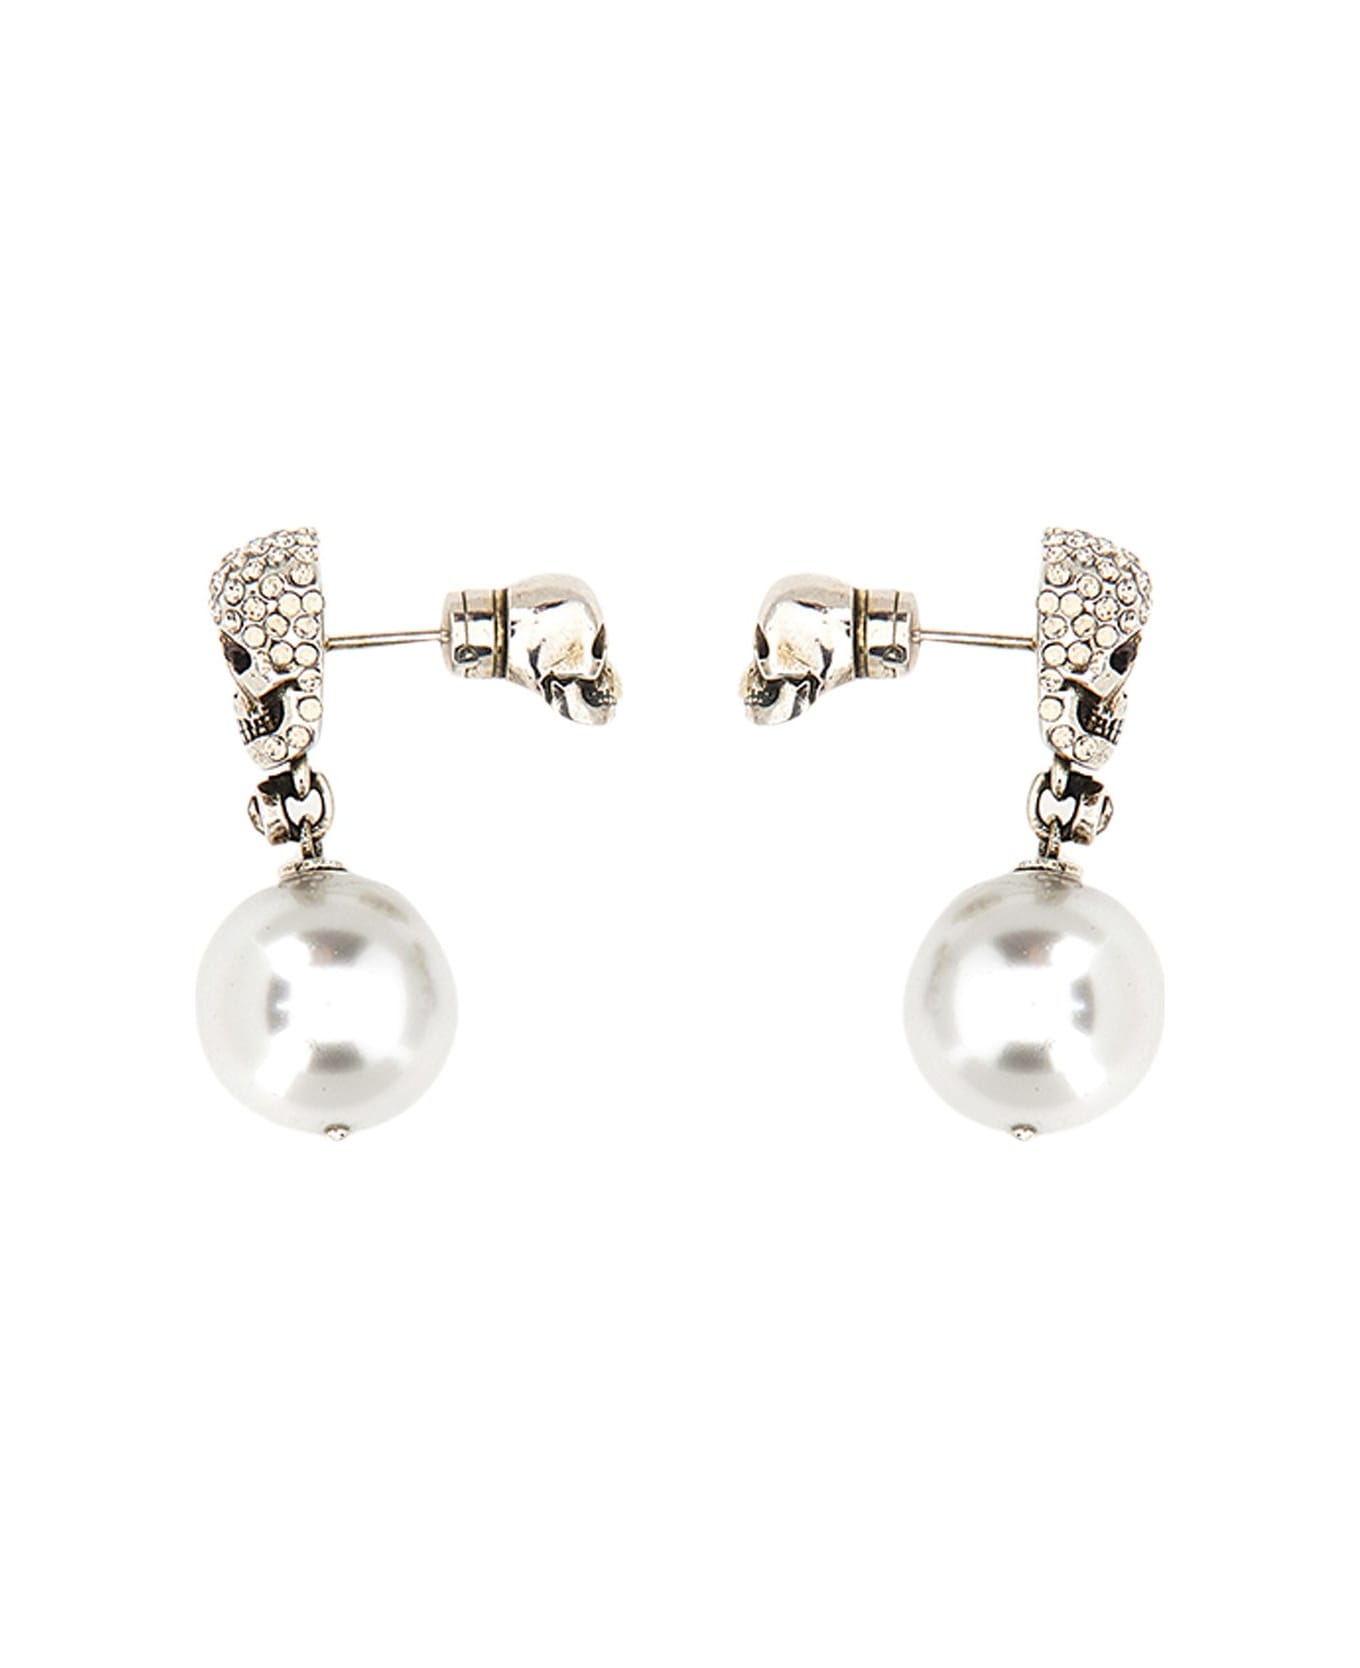 Alexander McQueen Skull Pearl Earrings - Silver イヤリング